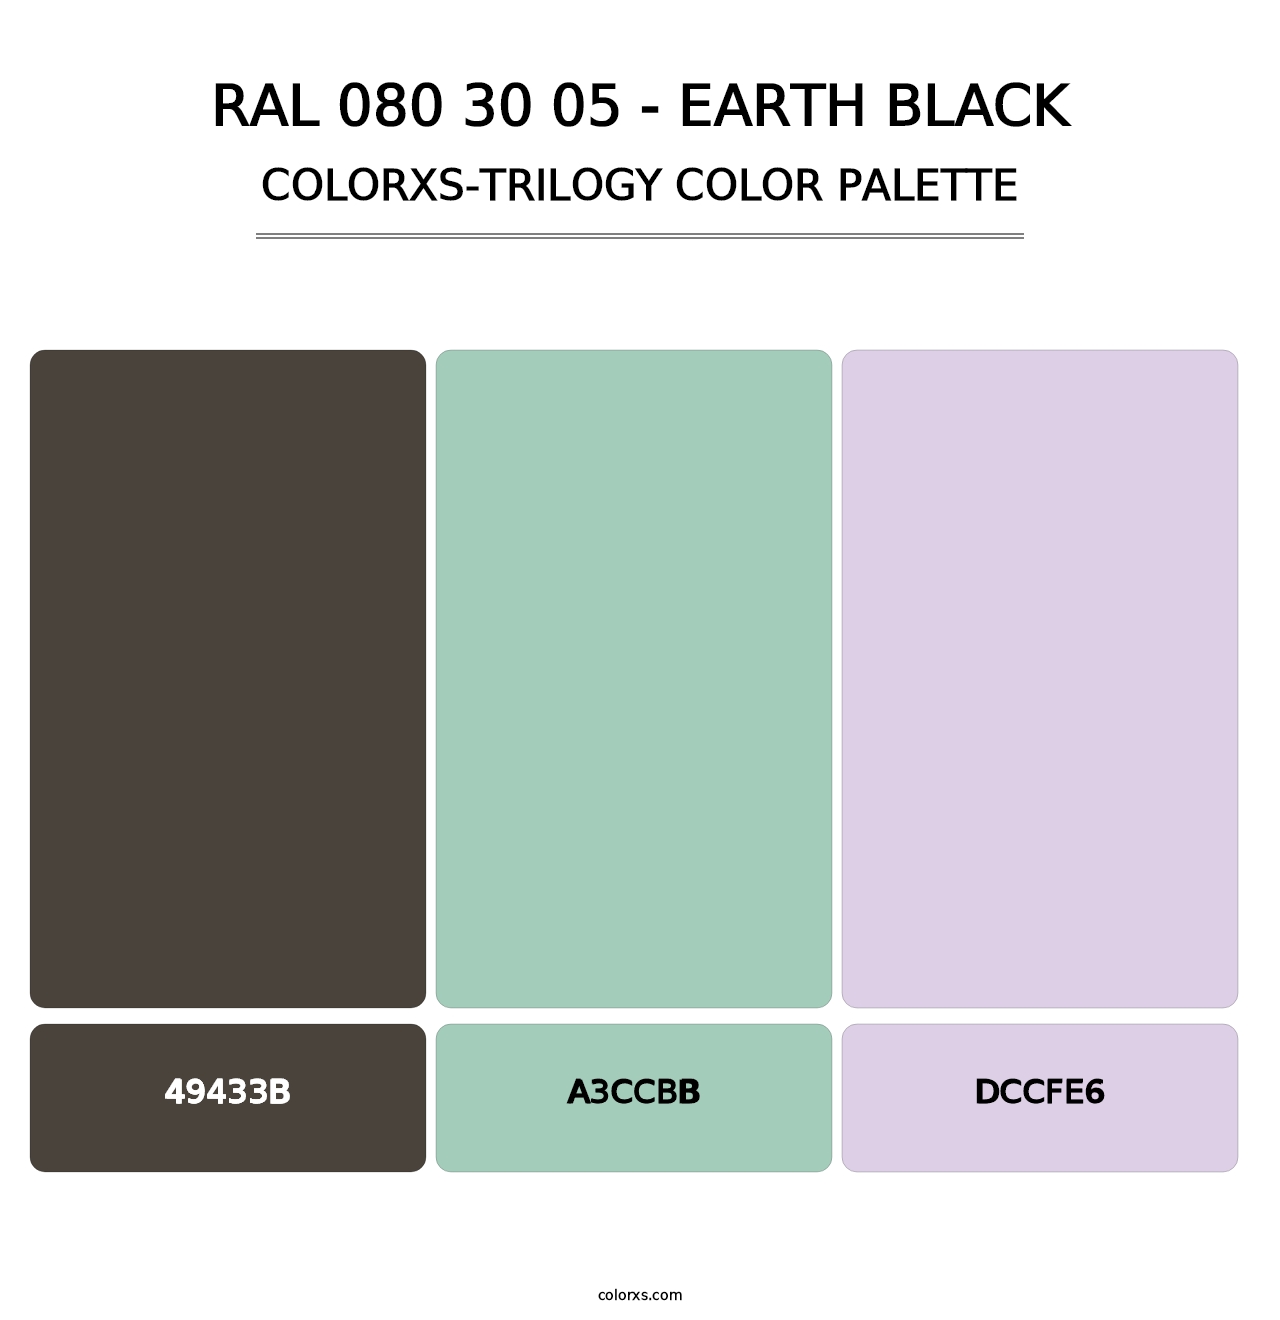 RAL 080 30 05 - Earth Black - Colorxs Trilogy Palette